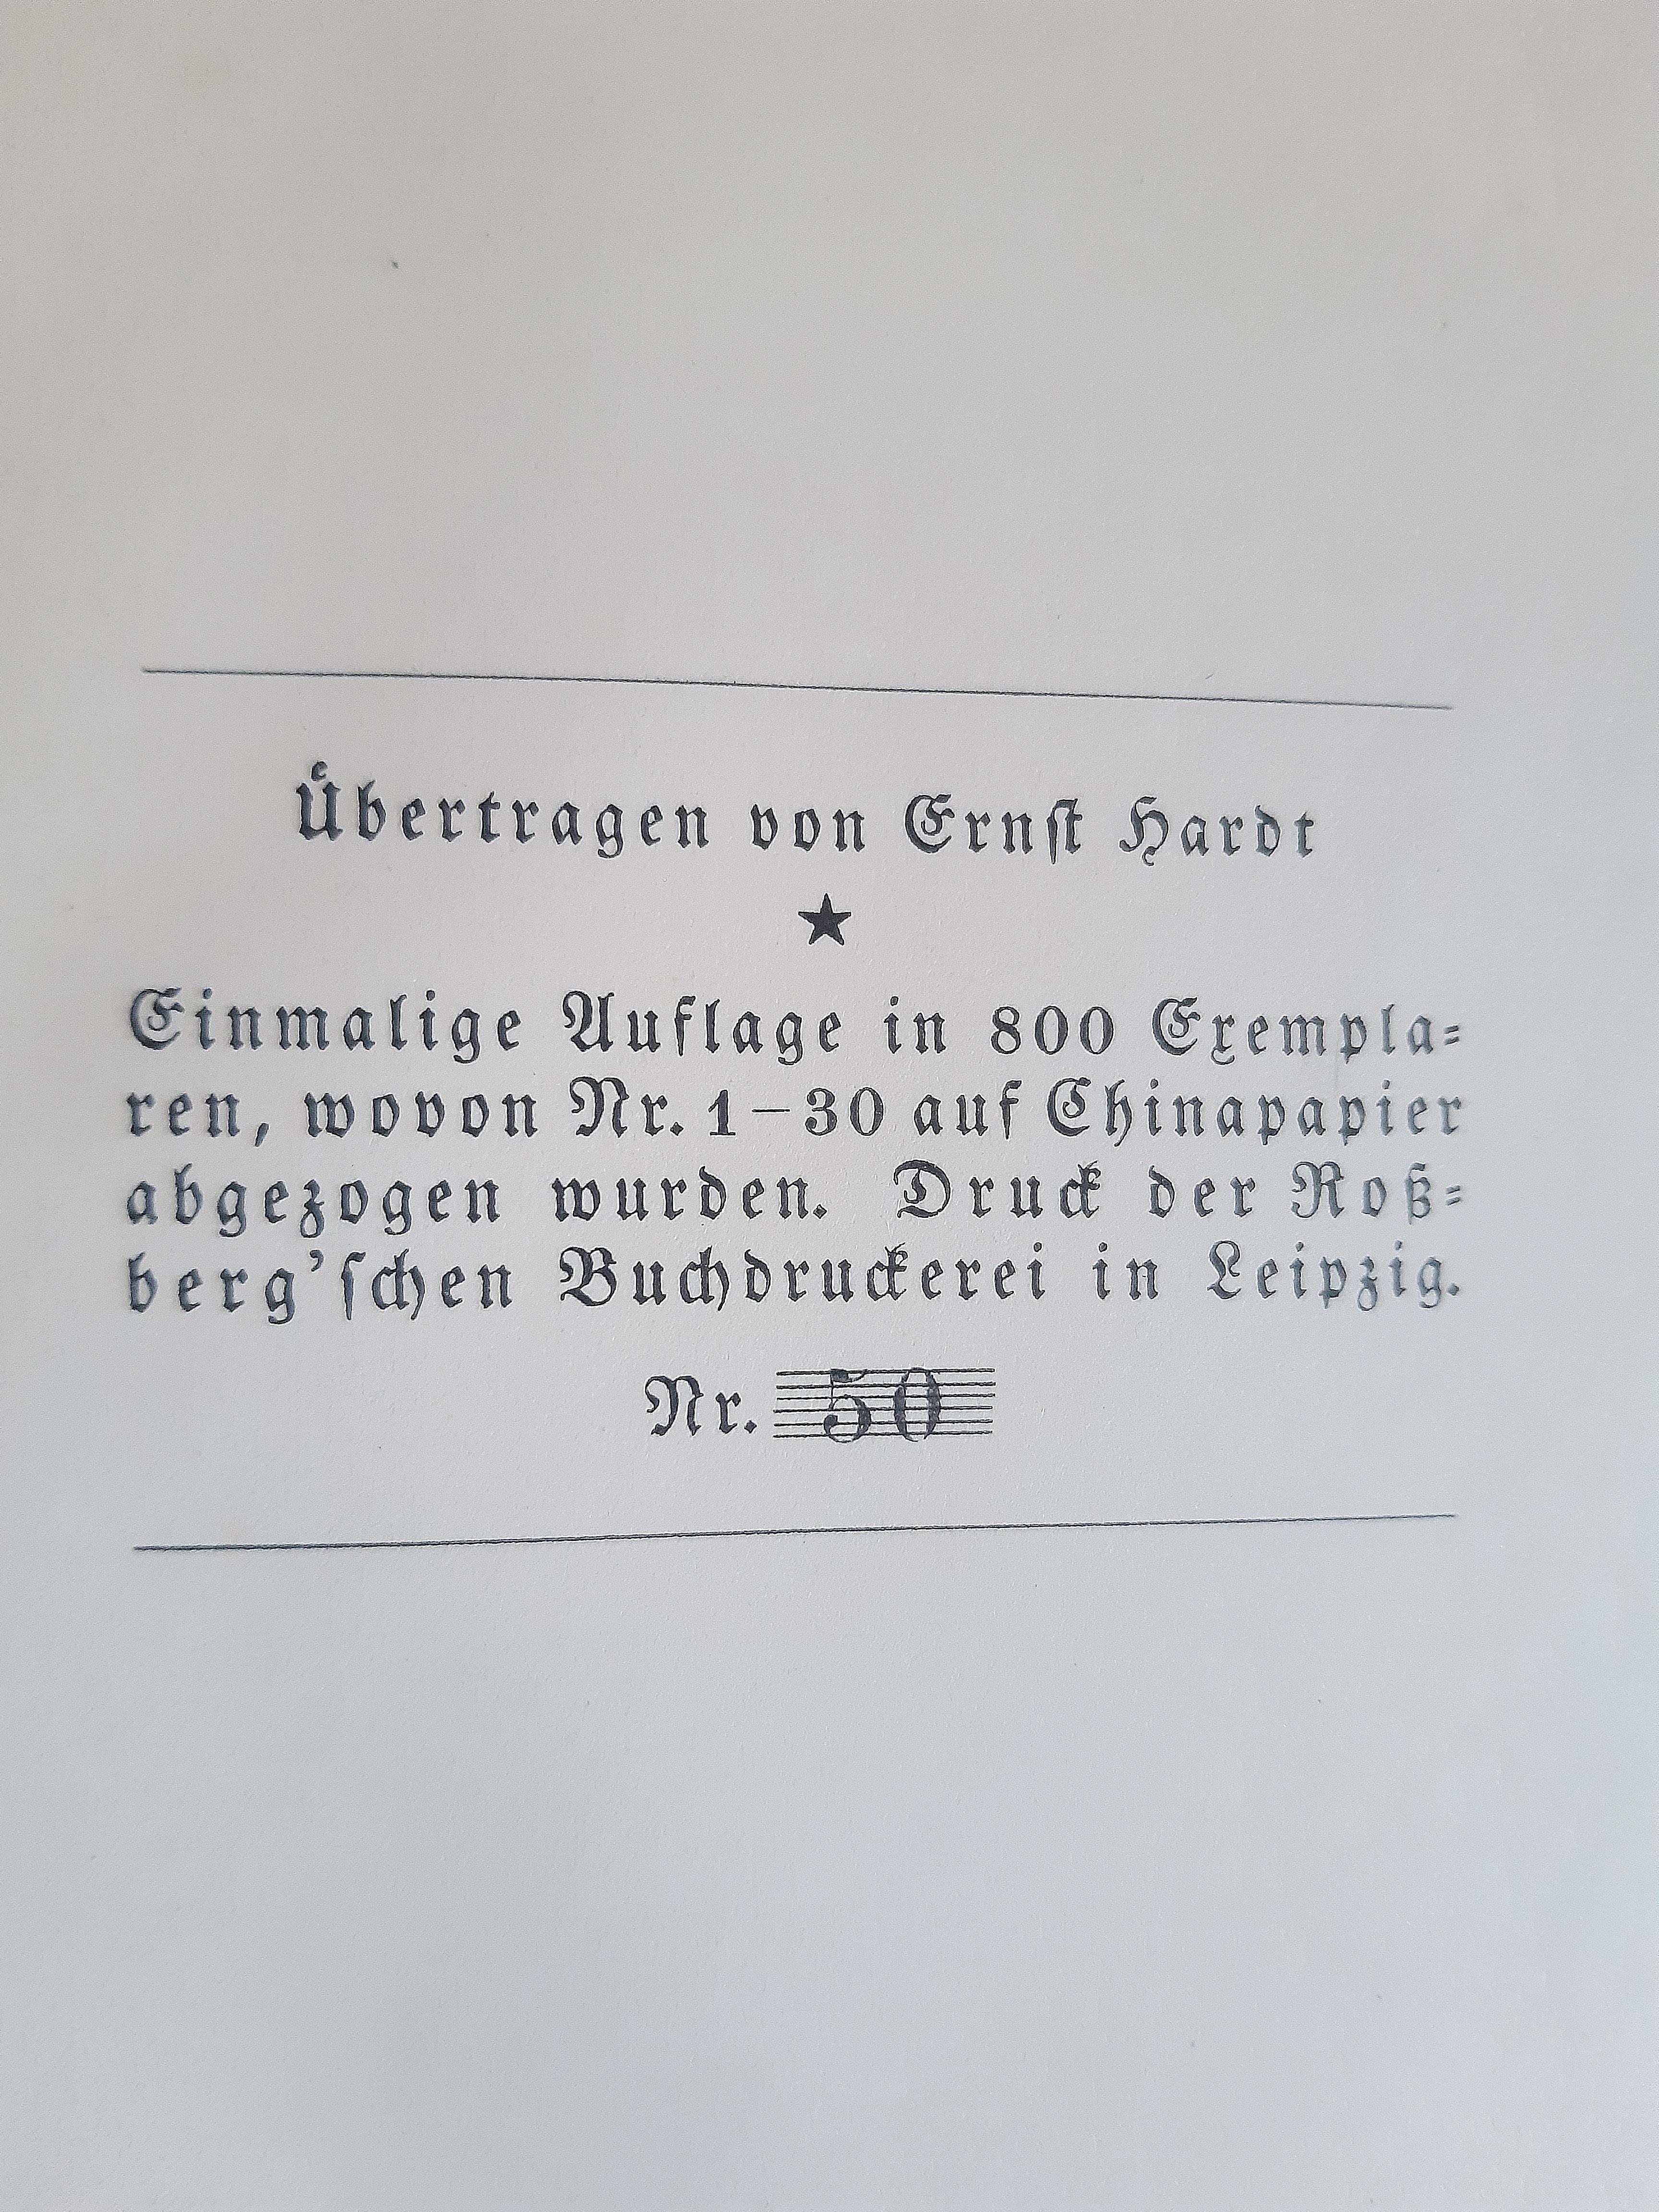 Candid Oder der Optimismu - Original Rare Book Illustrated by Max Unold - 1913 For Sale 2